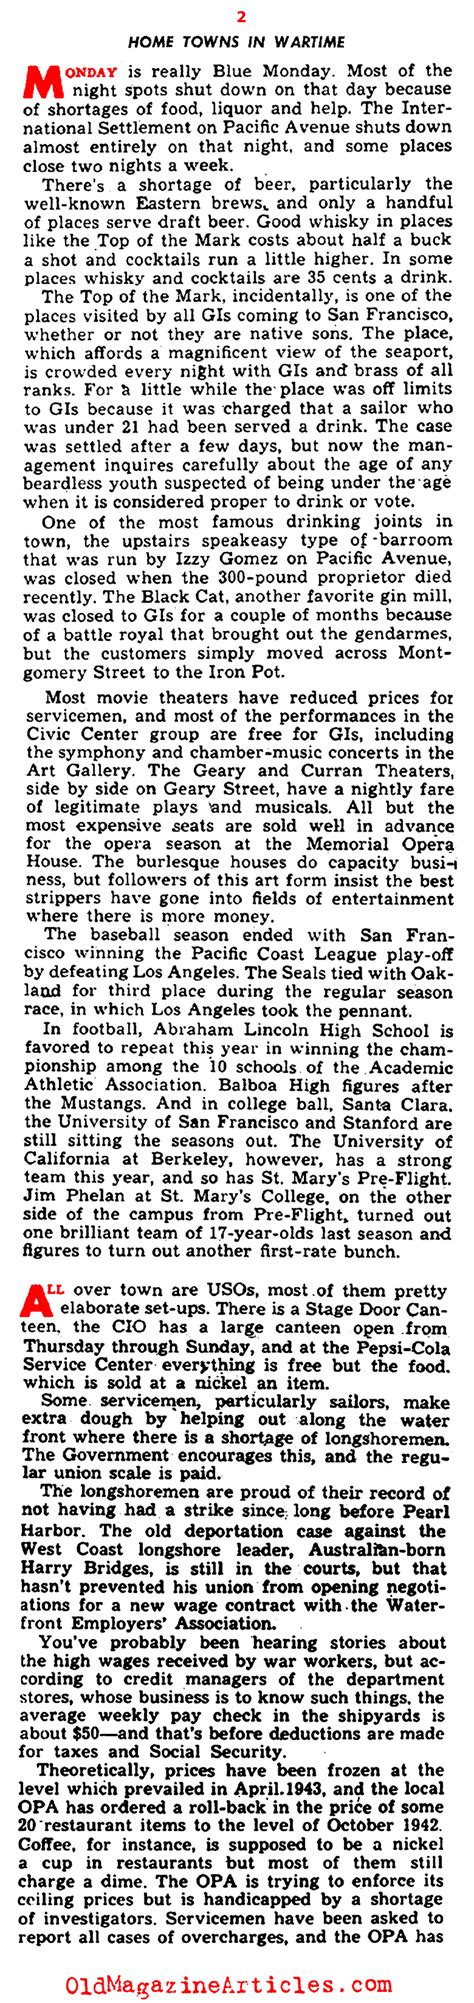 1940s San Franciscosan Francisco During Ww Ii Articlesan Francisco